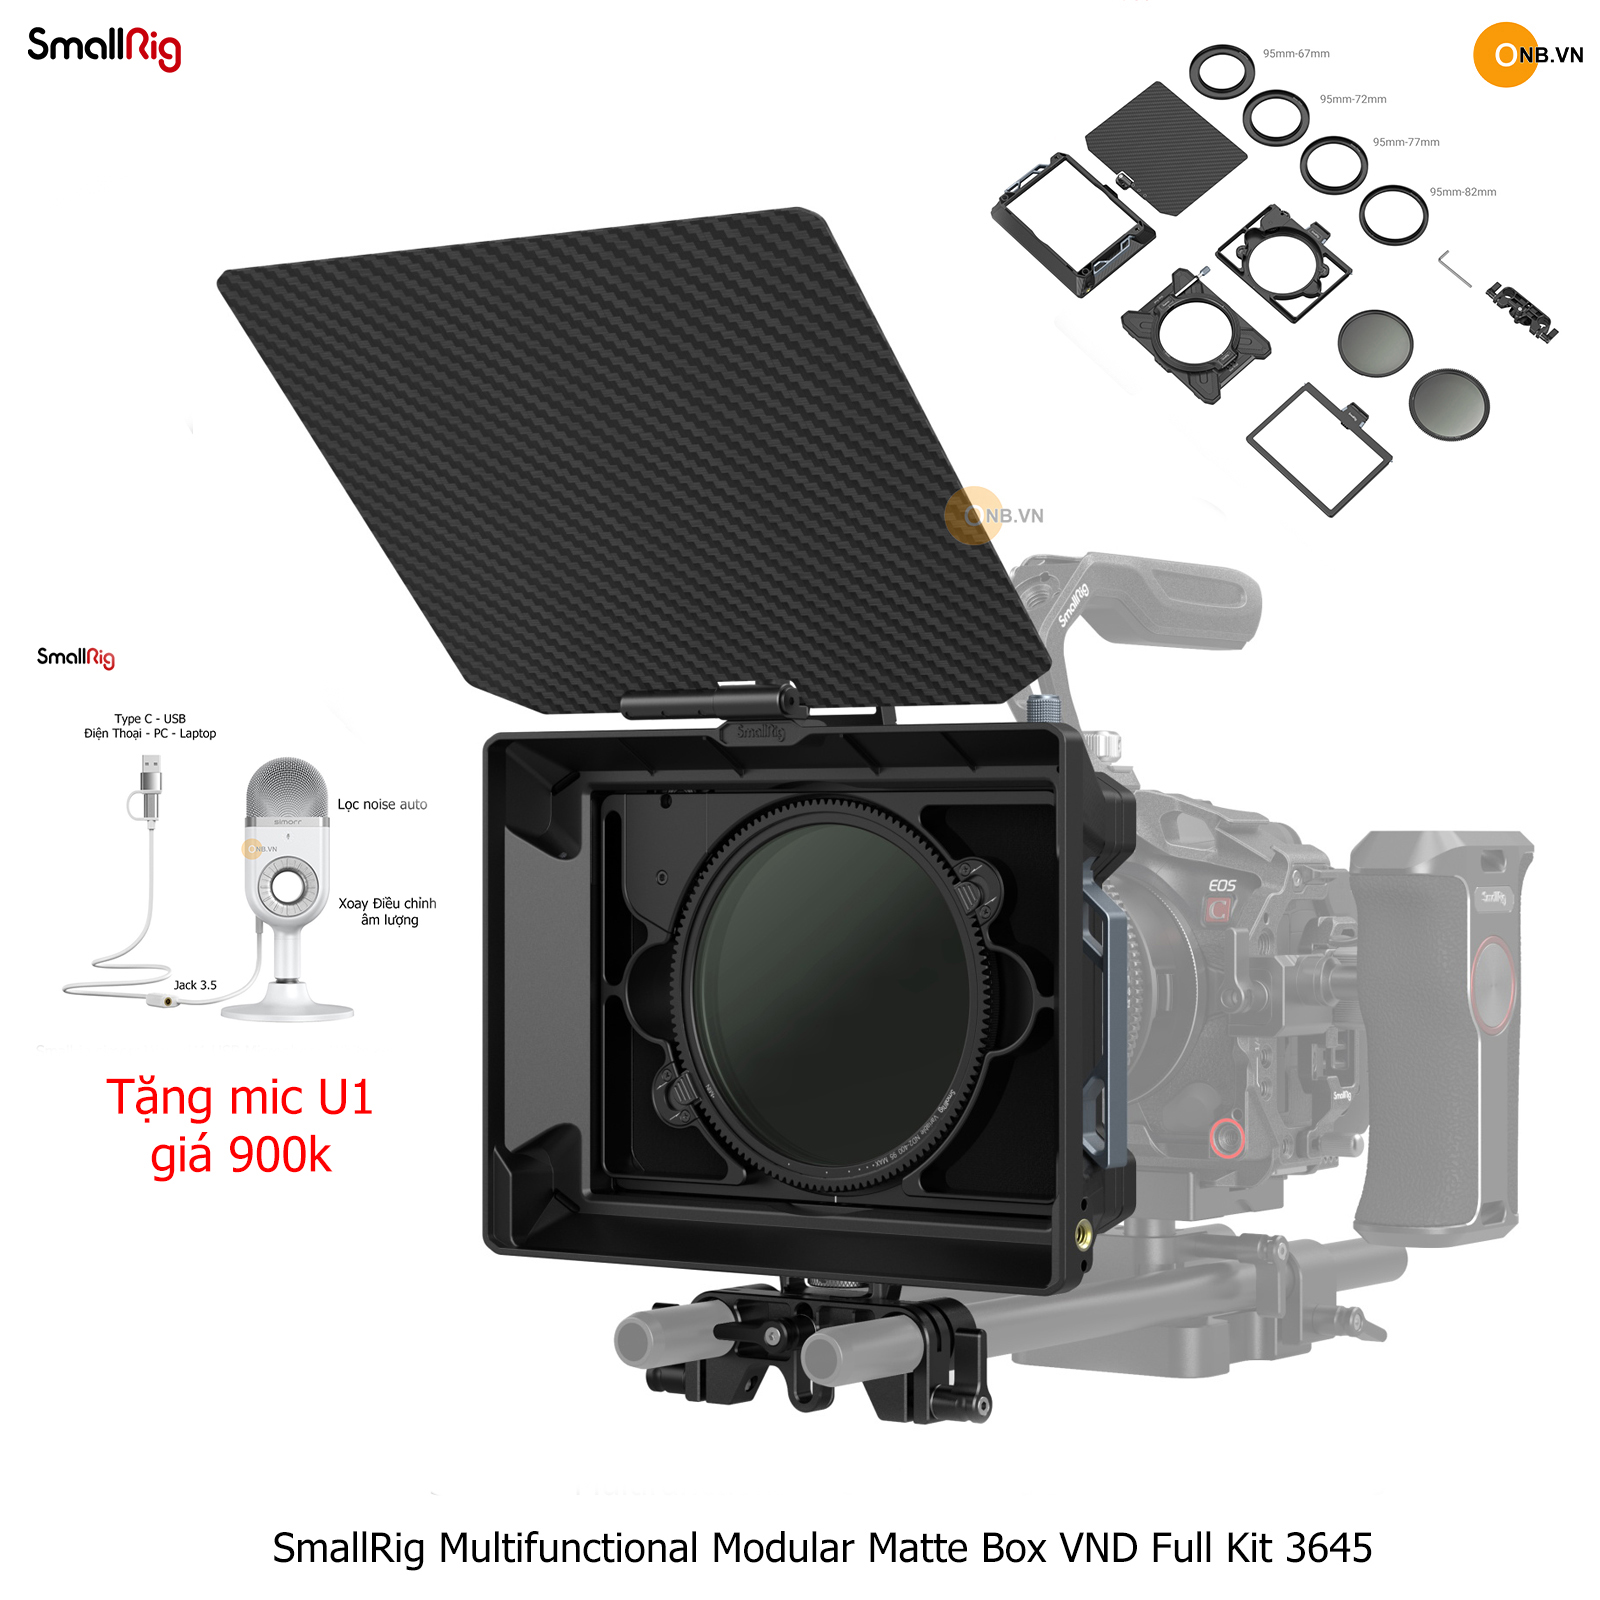 SmallRig Multifunctional Modular Matte Box VND Filter Full Kit 3645